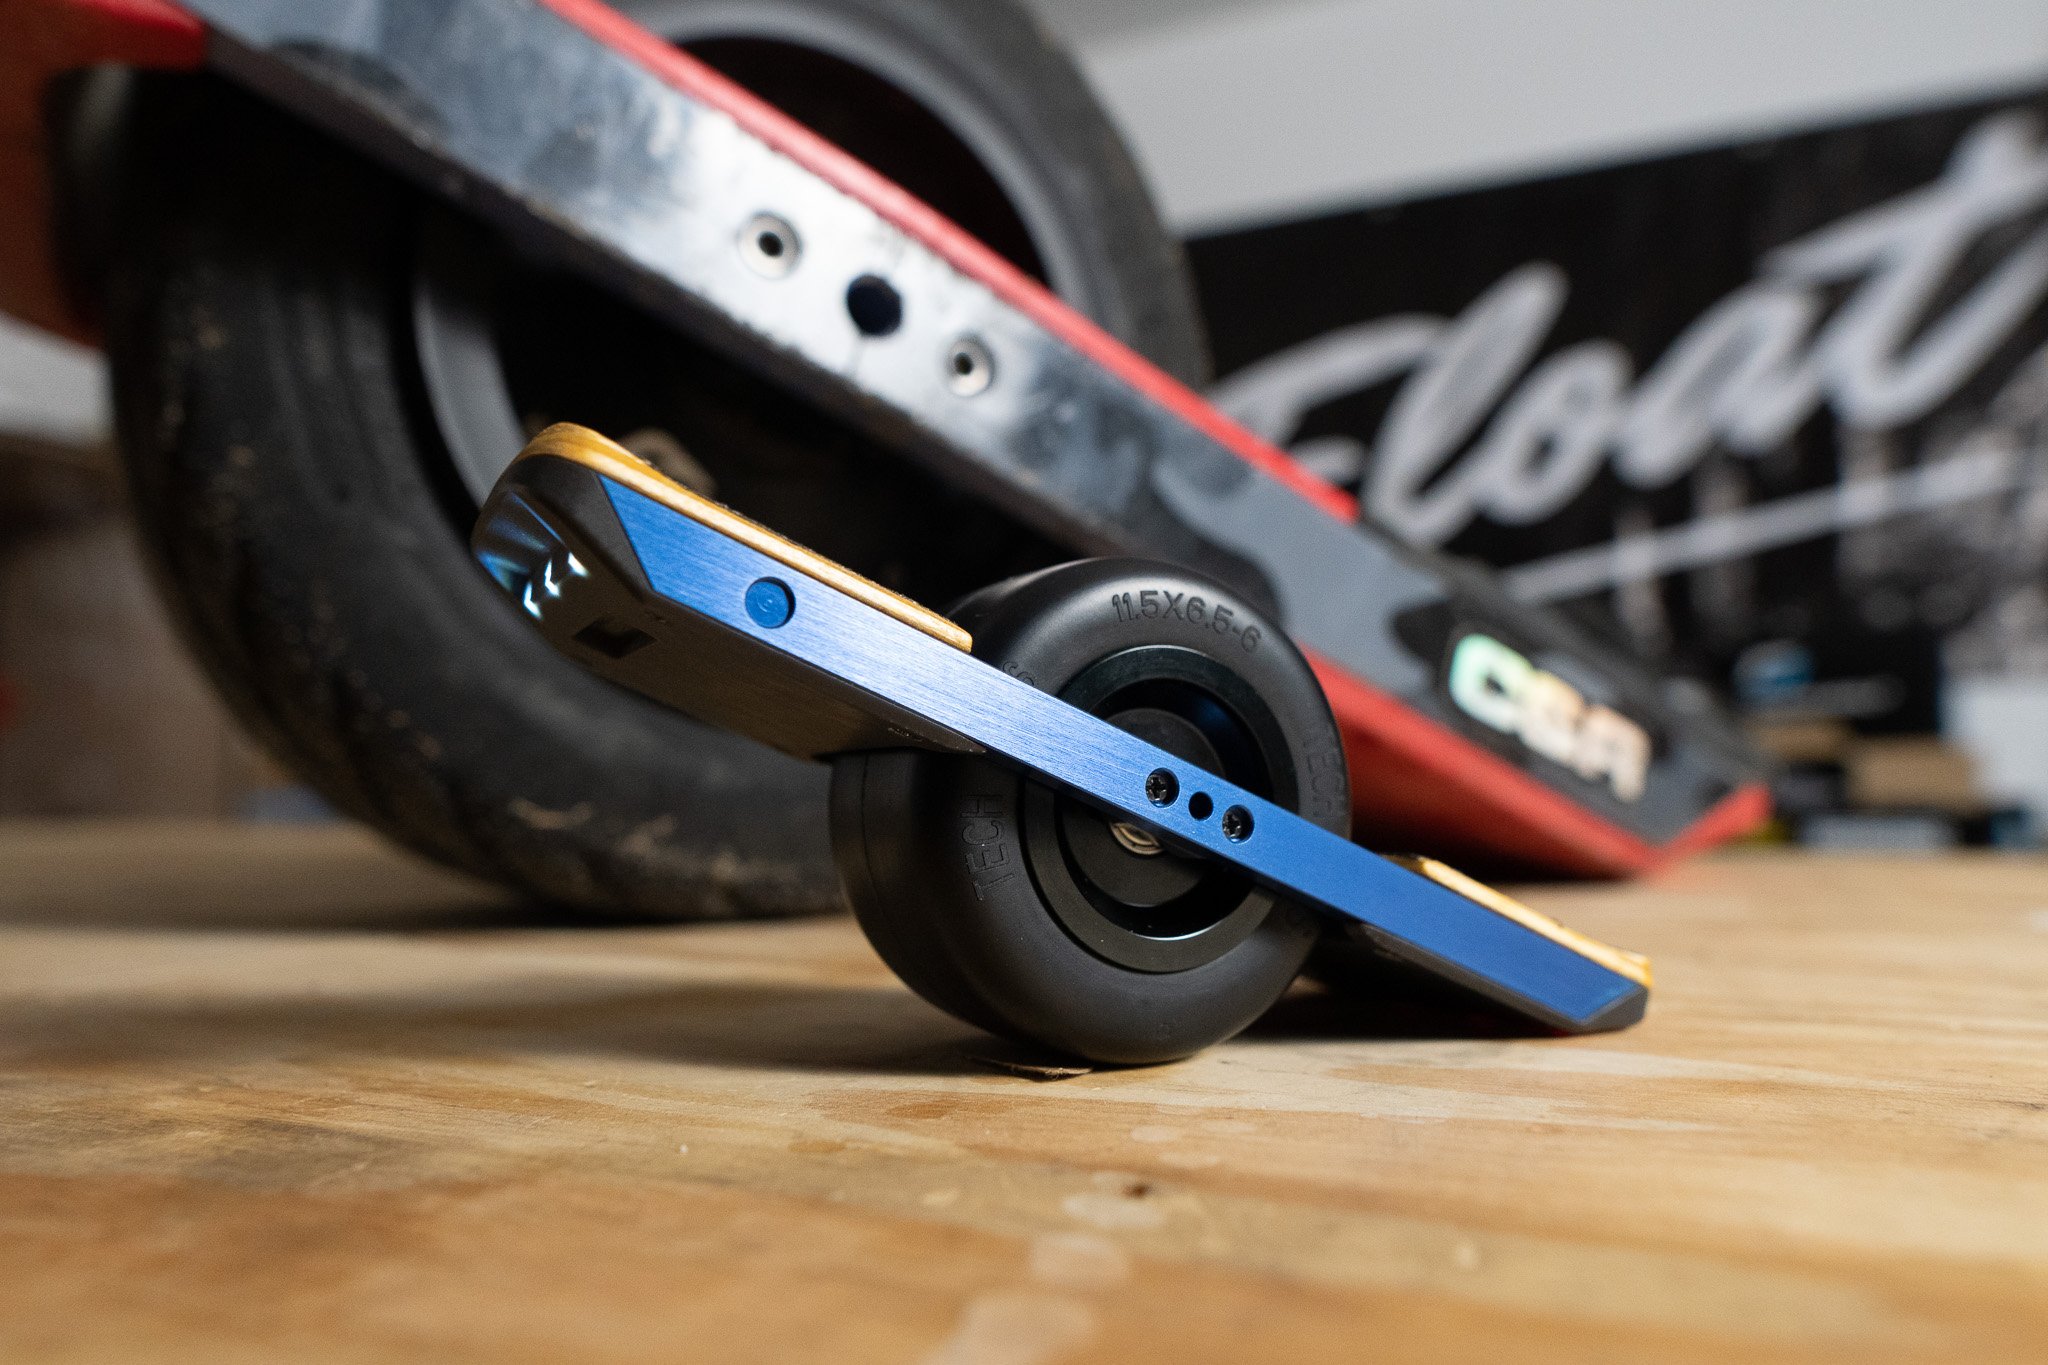 tech-rails-toy-skateboard-01.jpg